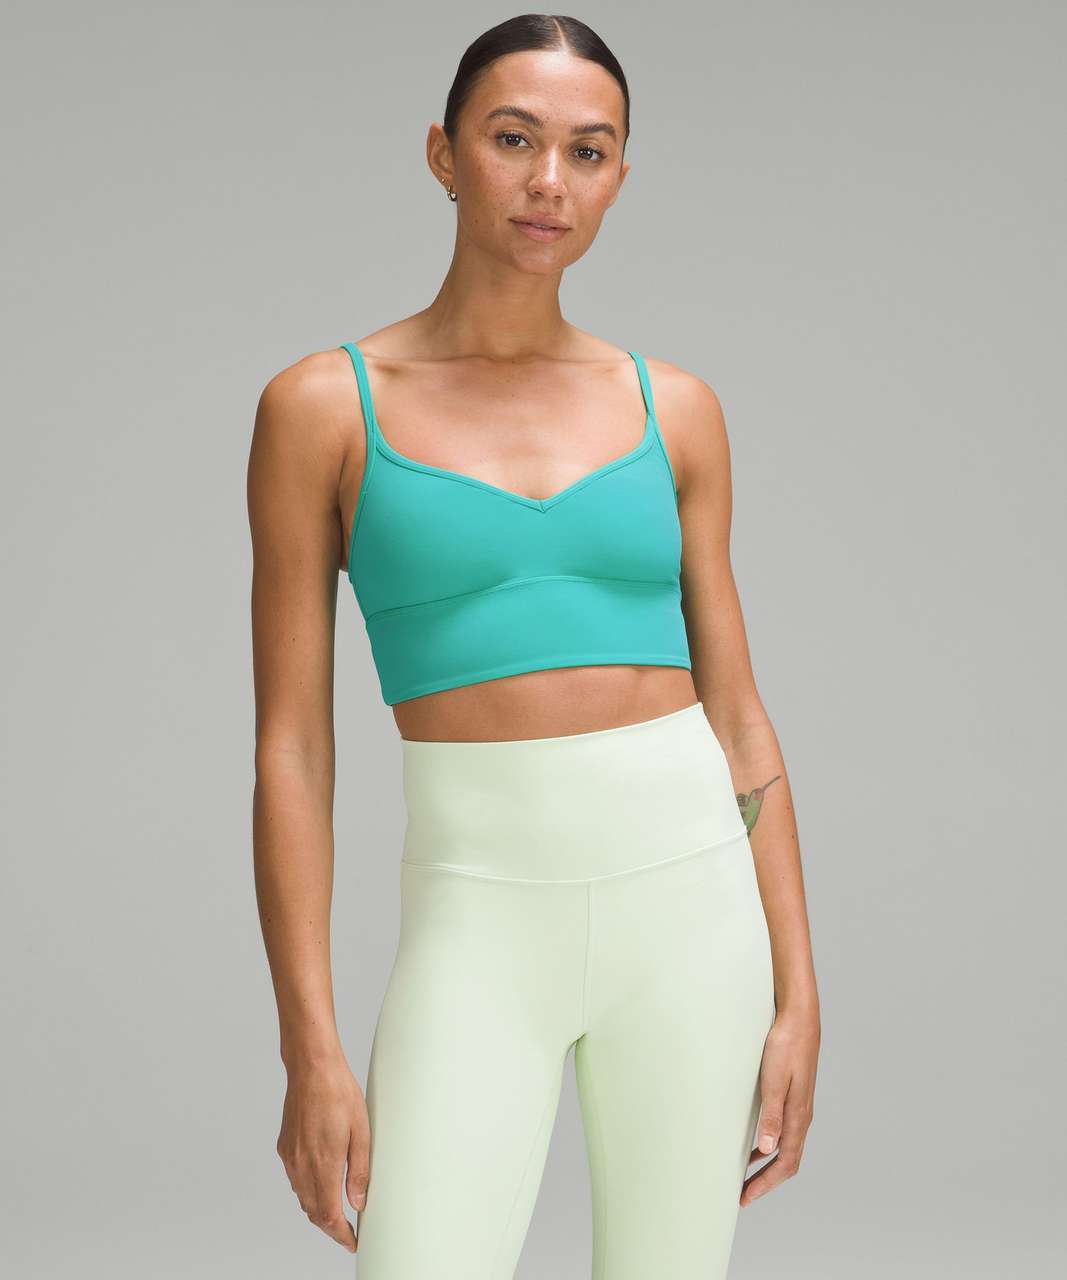 Lululemon Lime Green Sports Bra - Size Women's S/XS